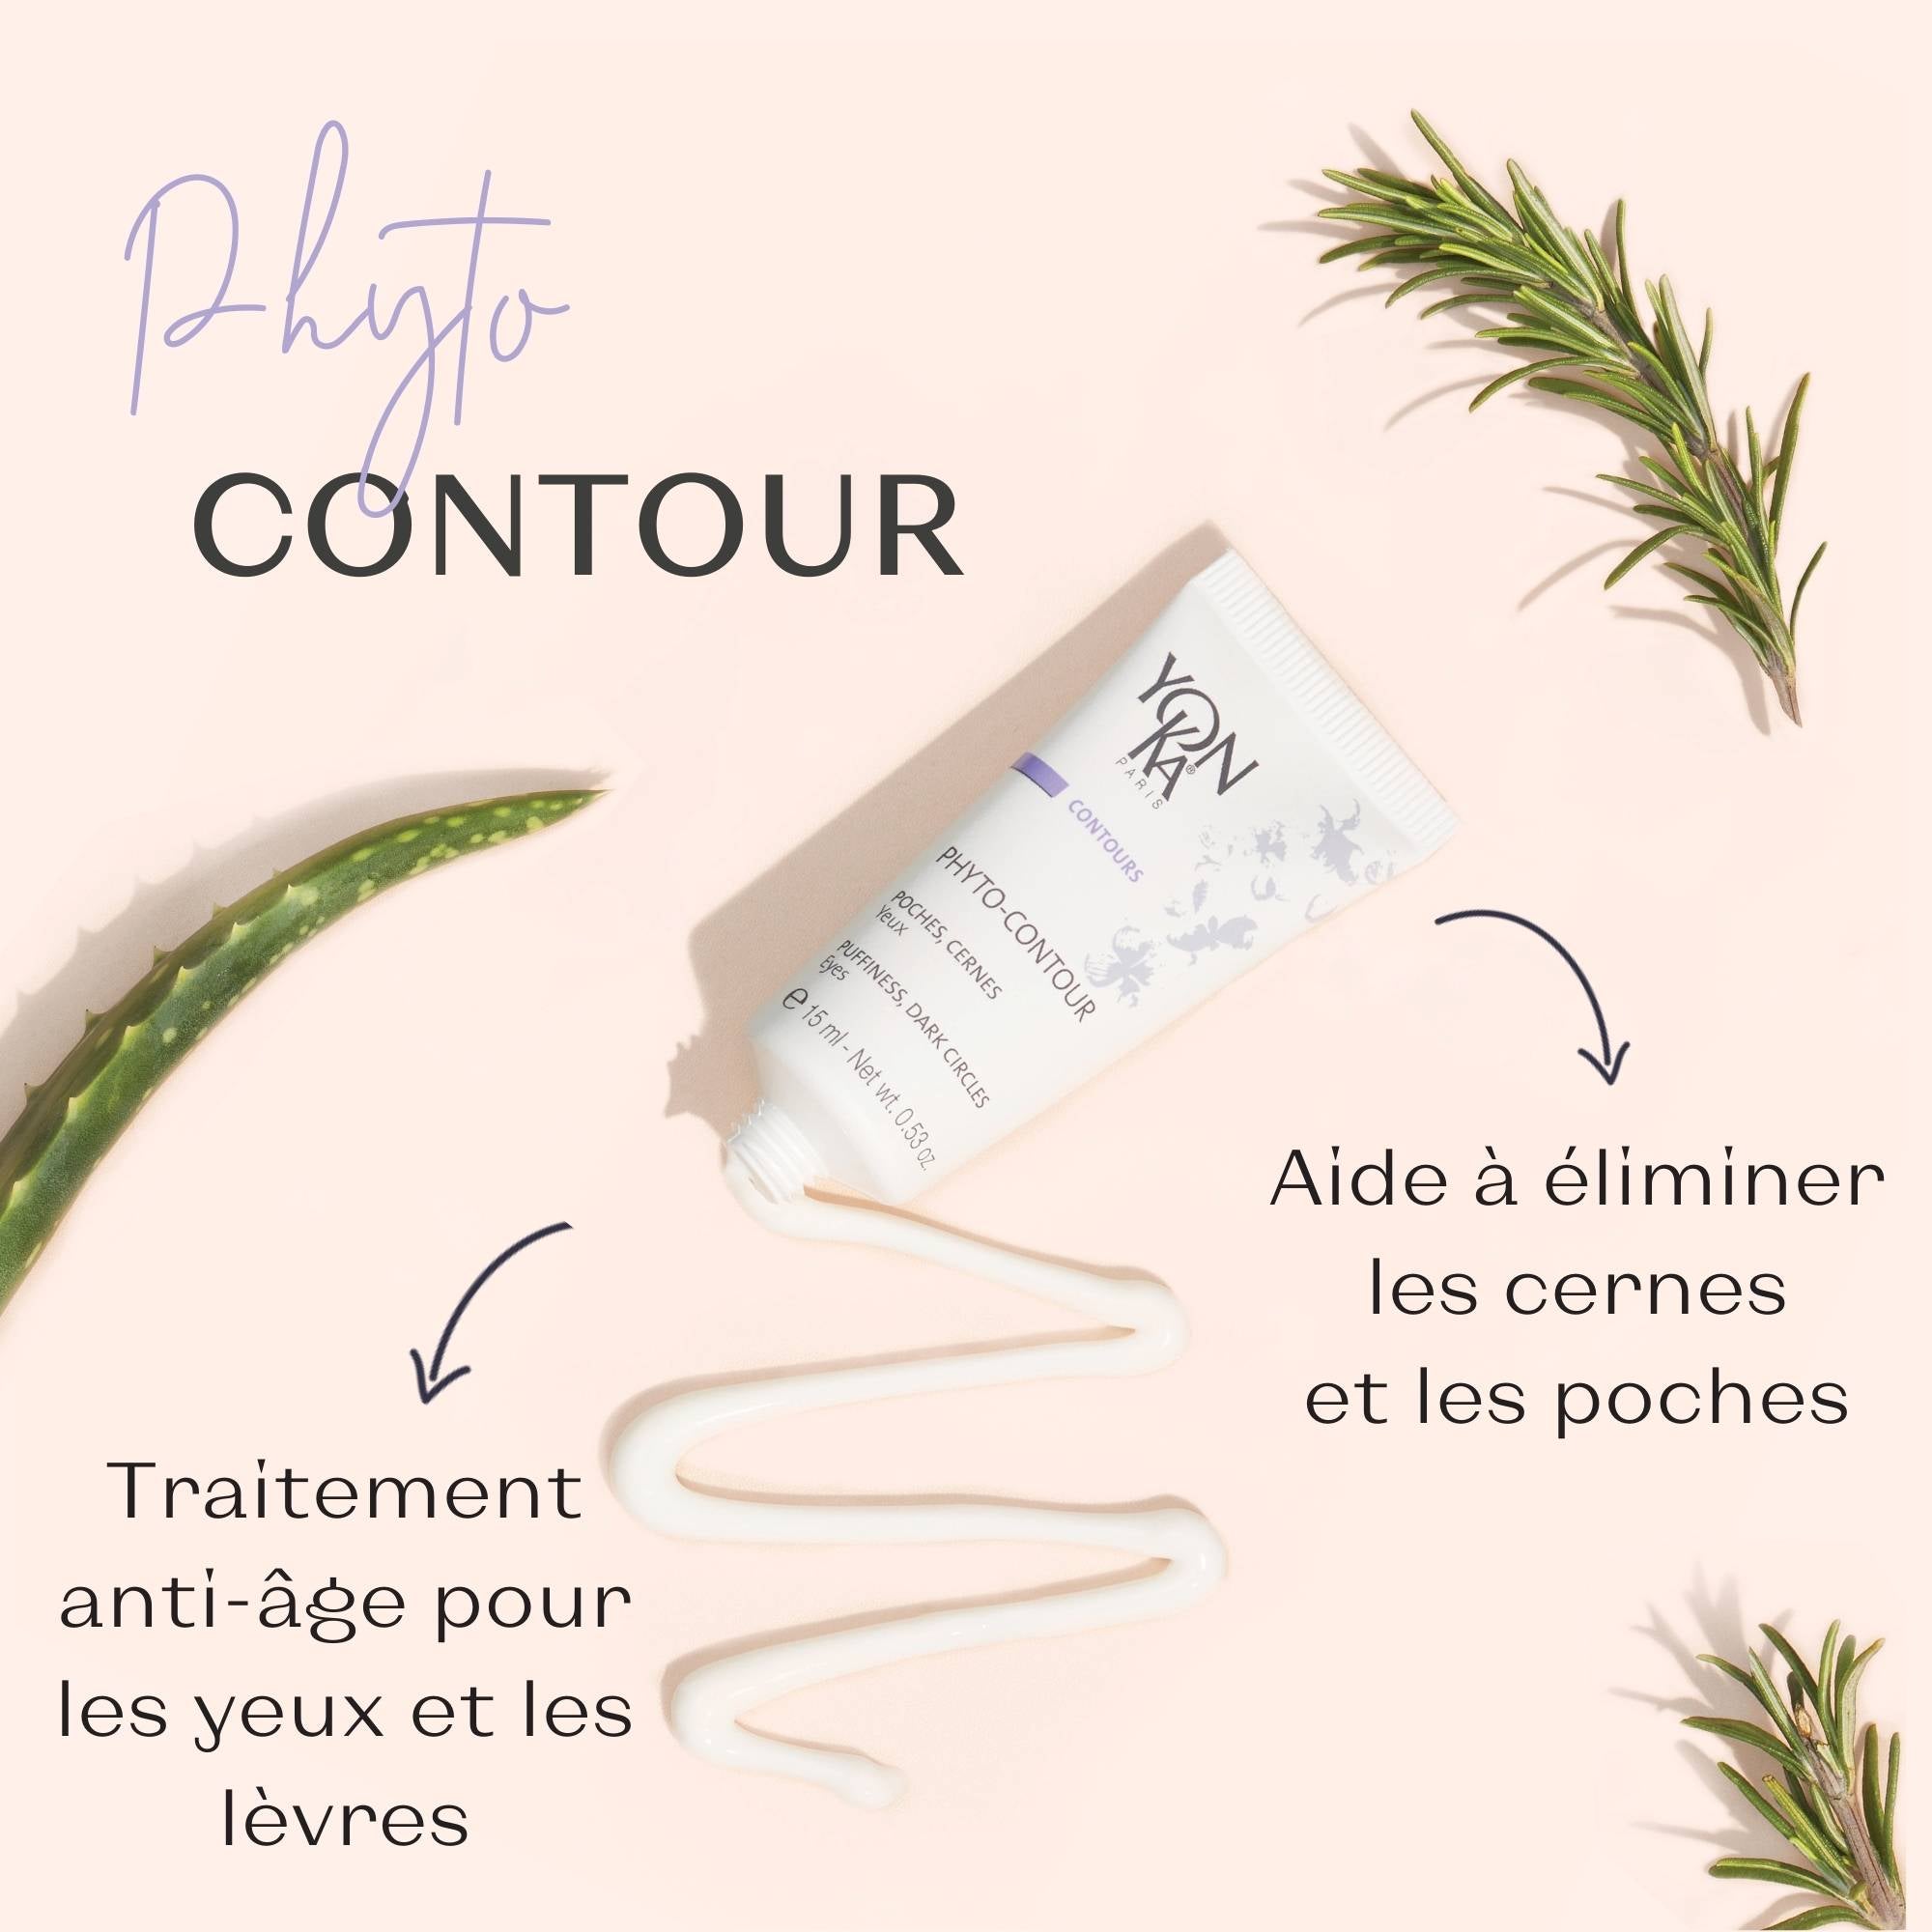 Phyto-Contour